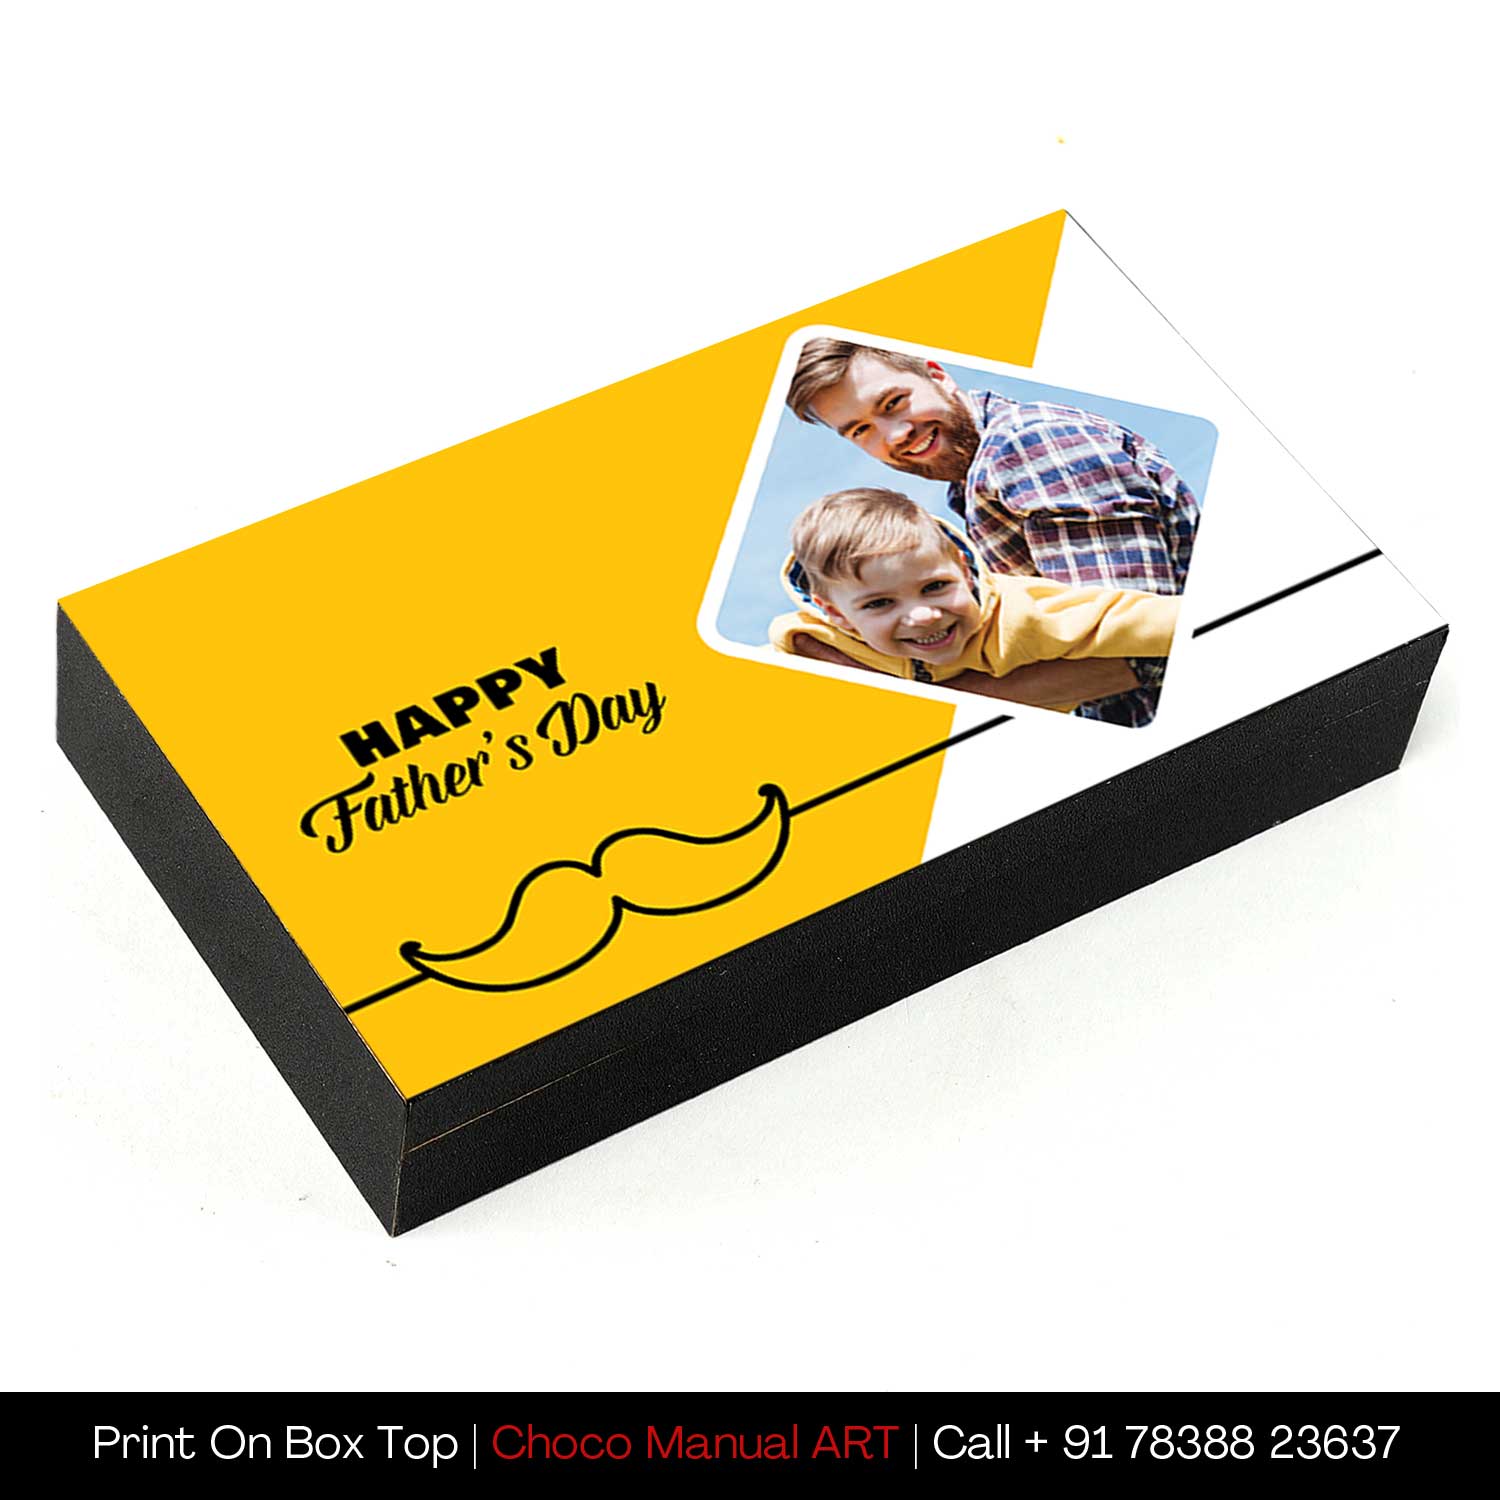 Bright yellow elegant design box of personalised chocolates